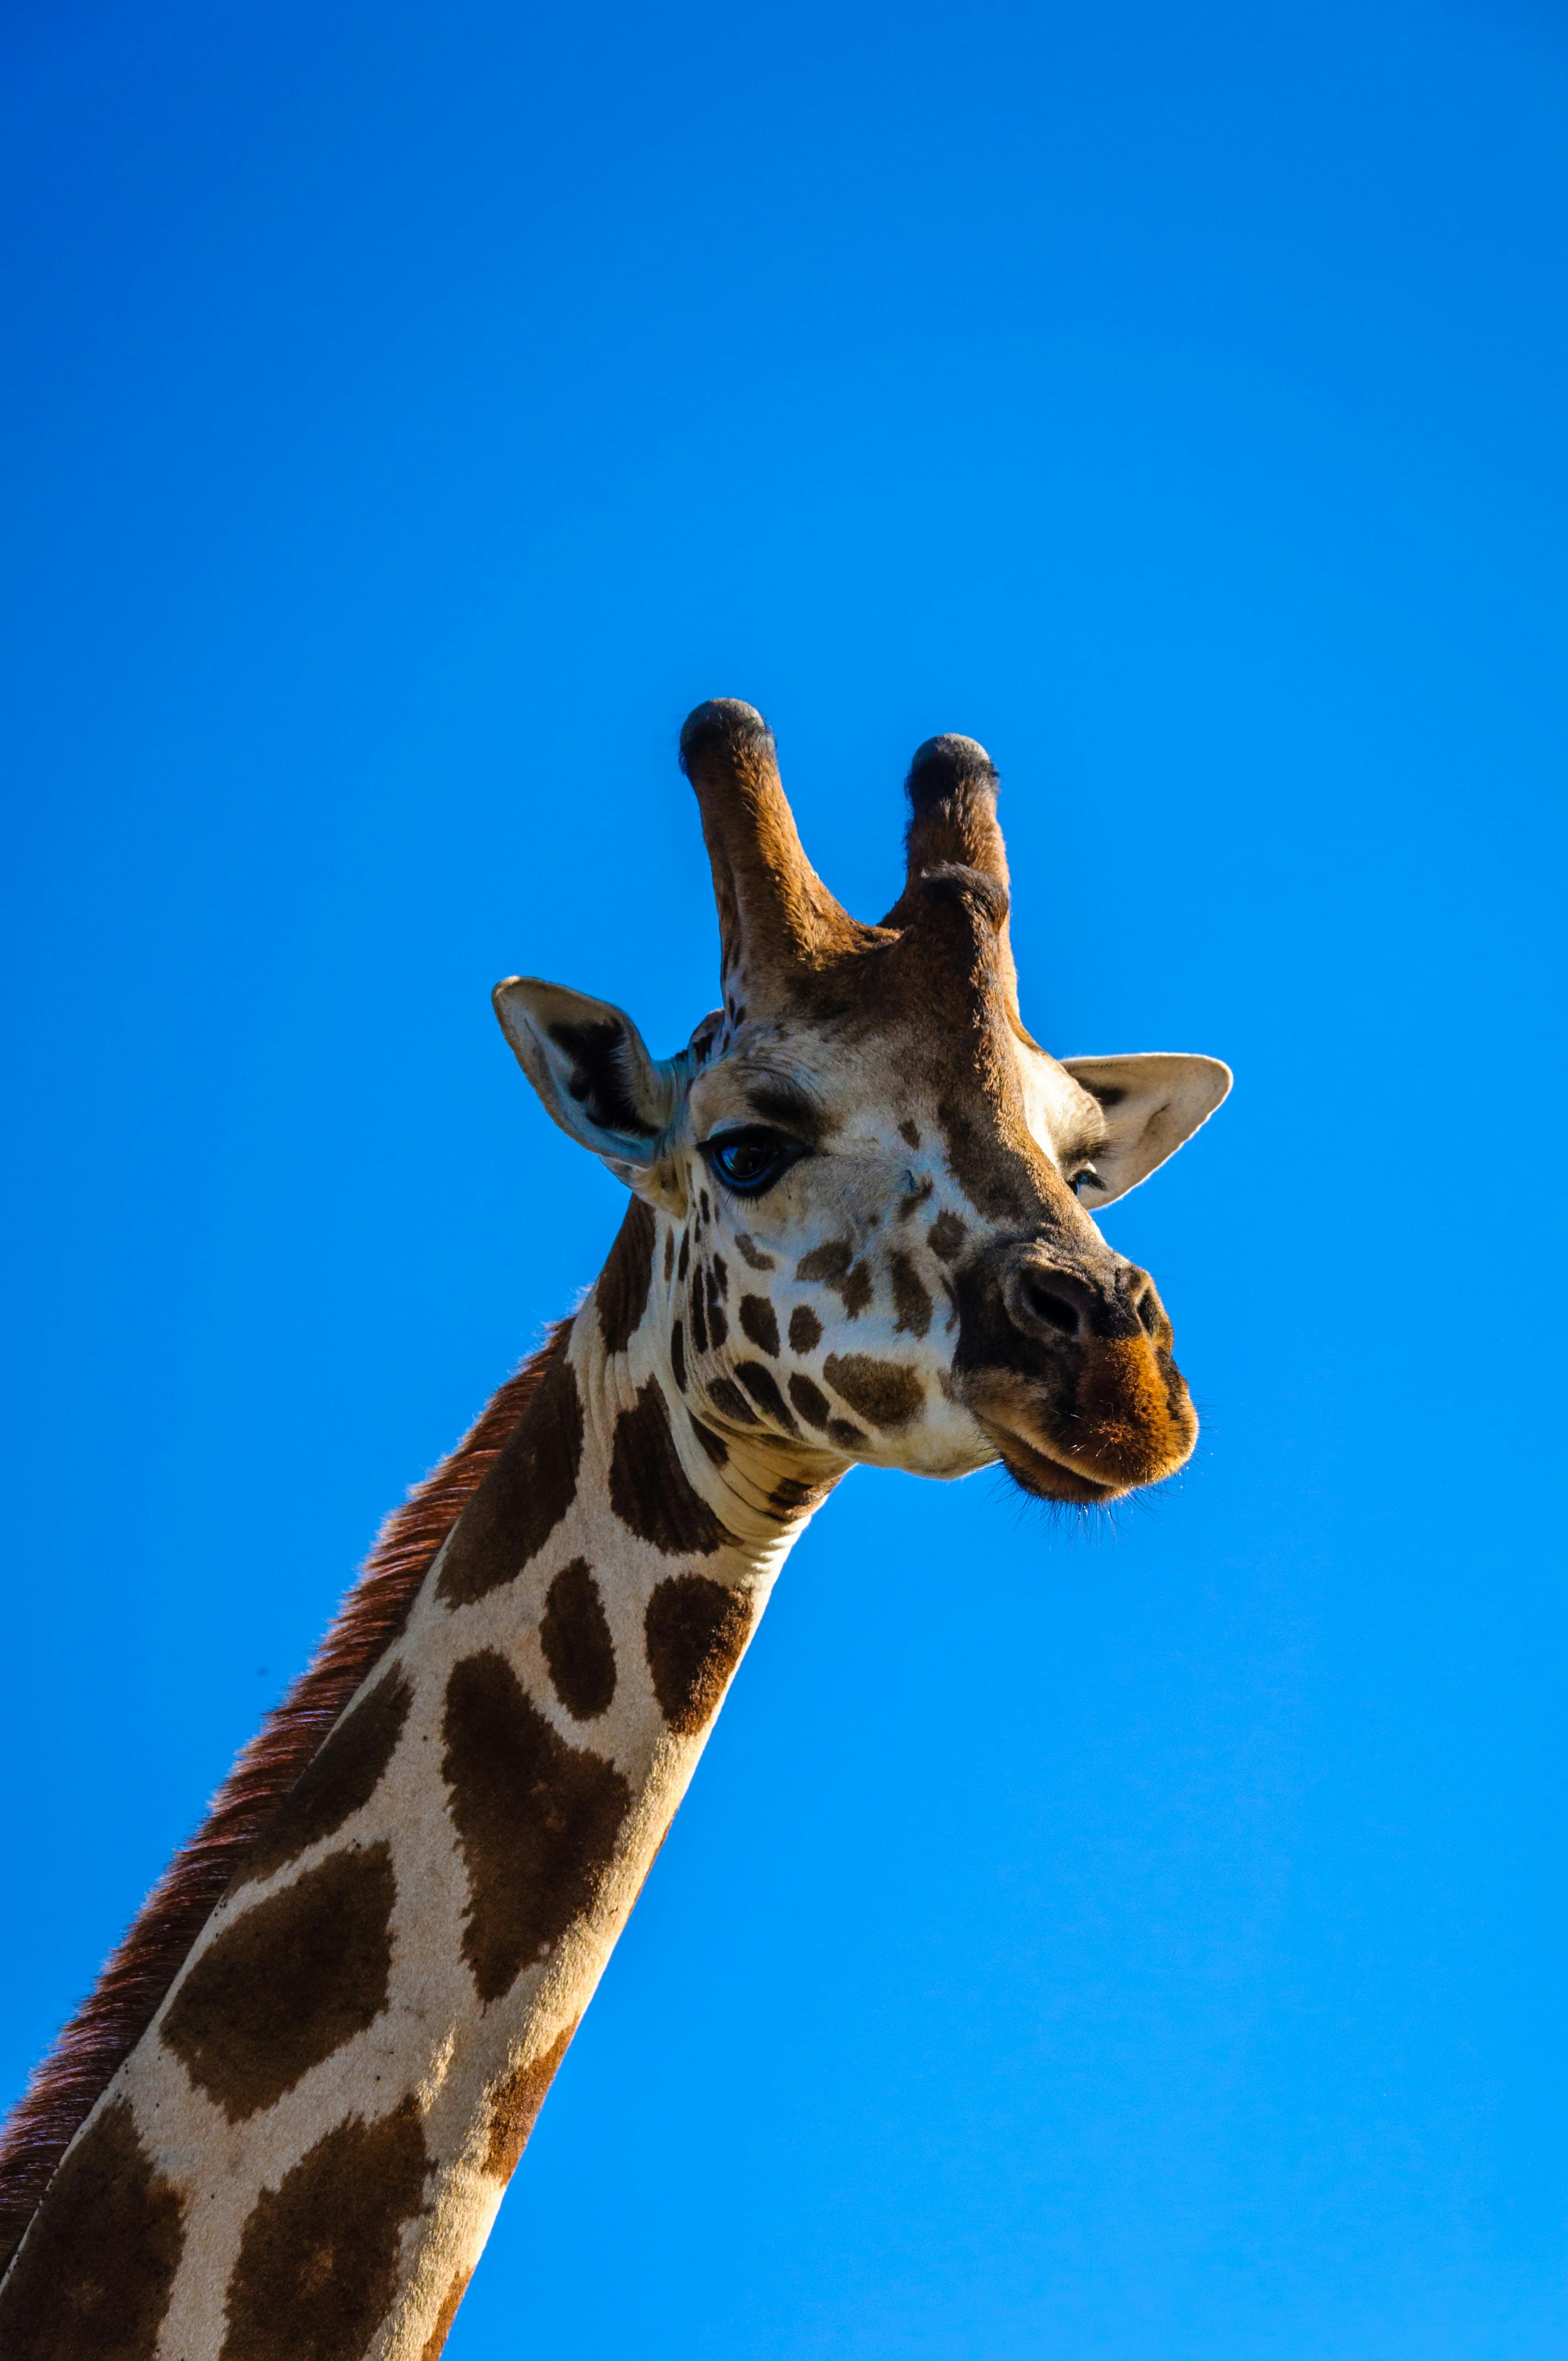 giraffe background